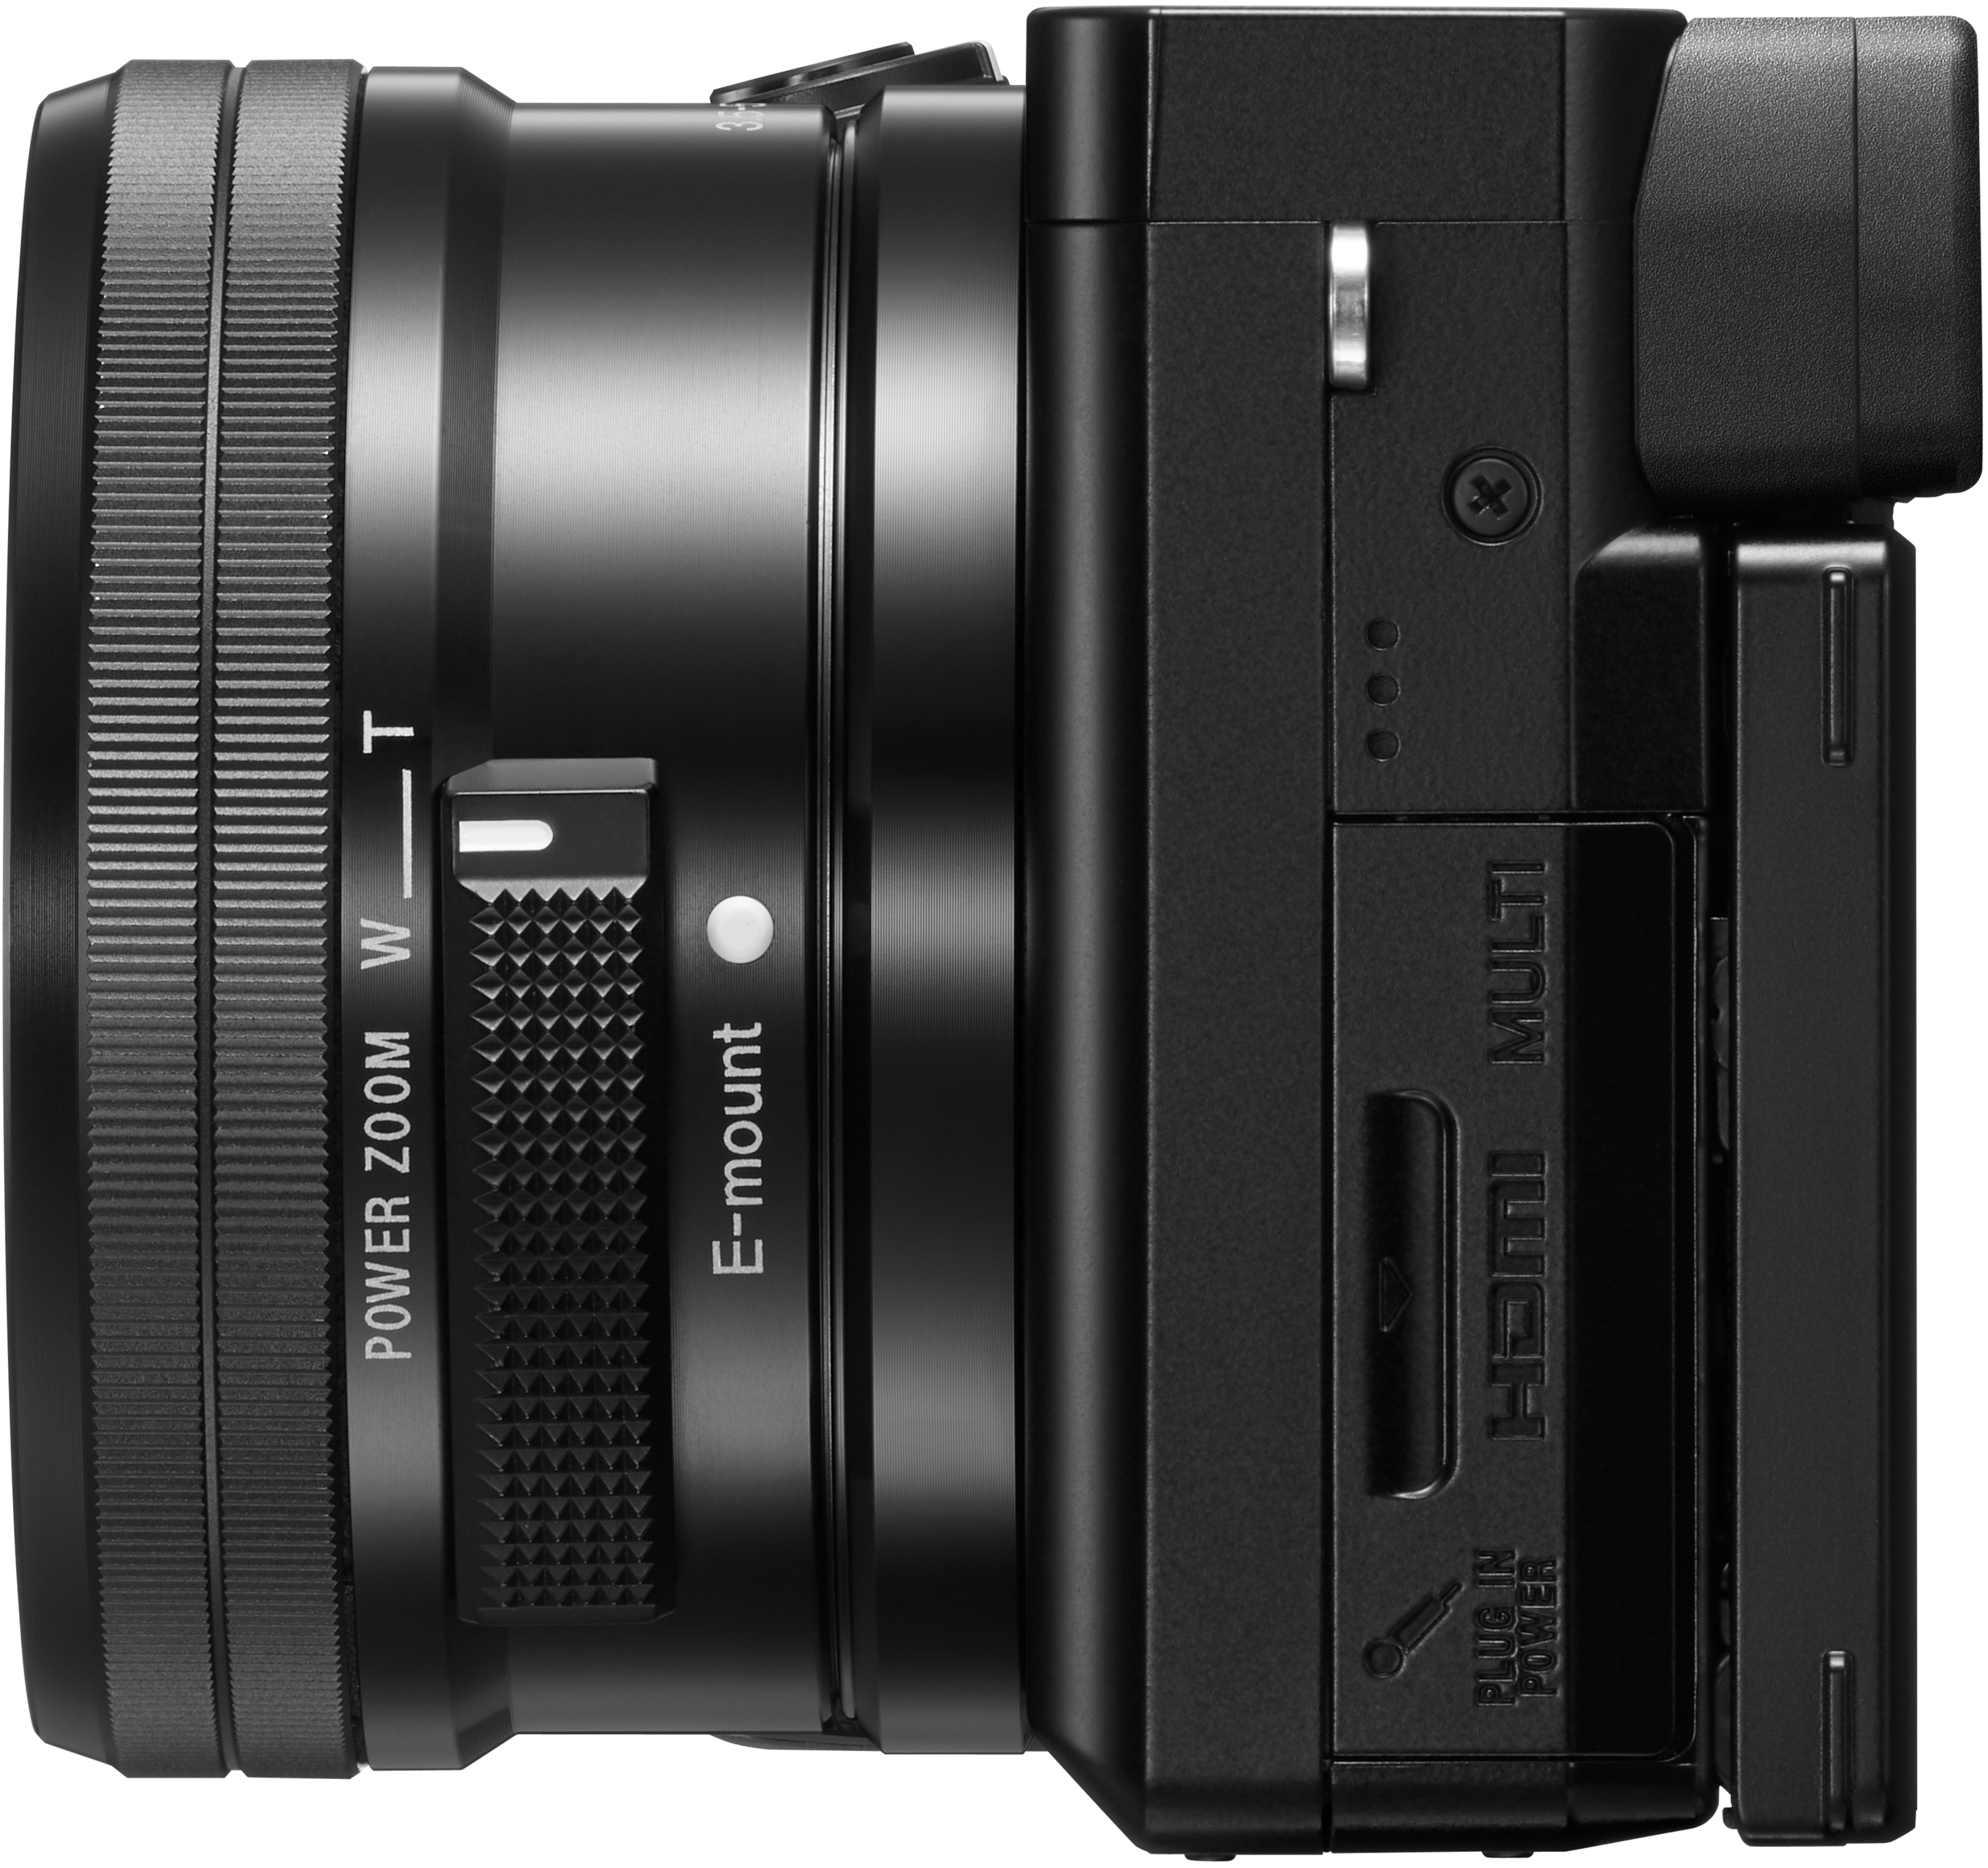 Alpha Kit WLAN 16-50 Display 7,6 mm, Touchscreen, (ILCE-6100L) mit Objektiv cm SONY 6100 Systemkamera